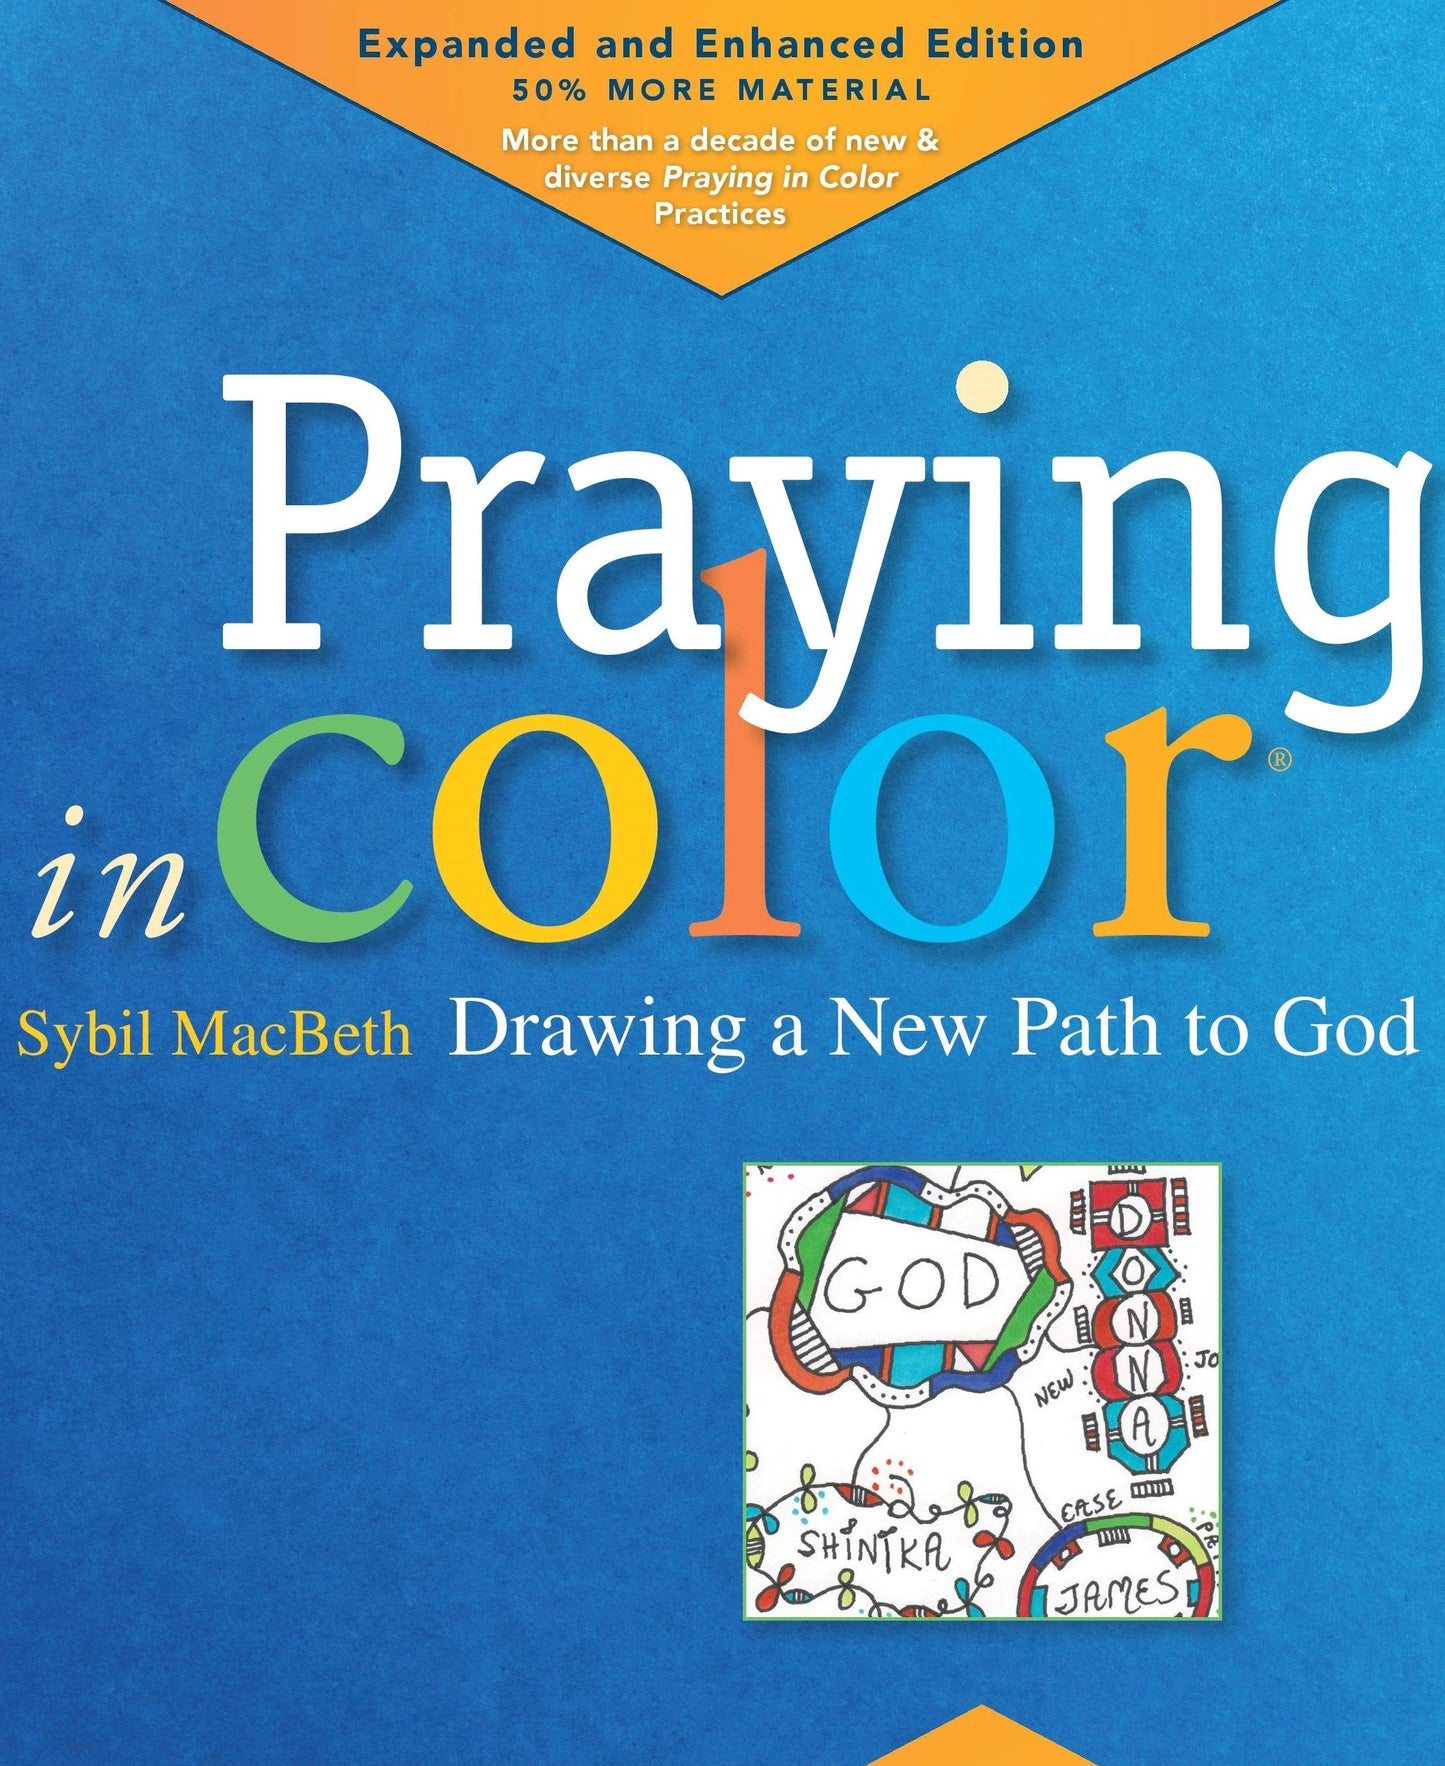 Book: Praying in color - Sybil MacBeth